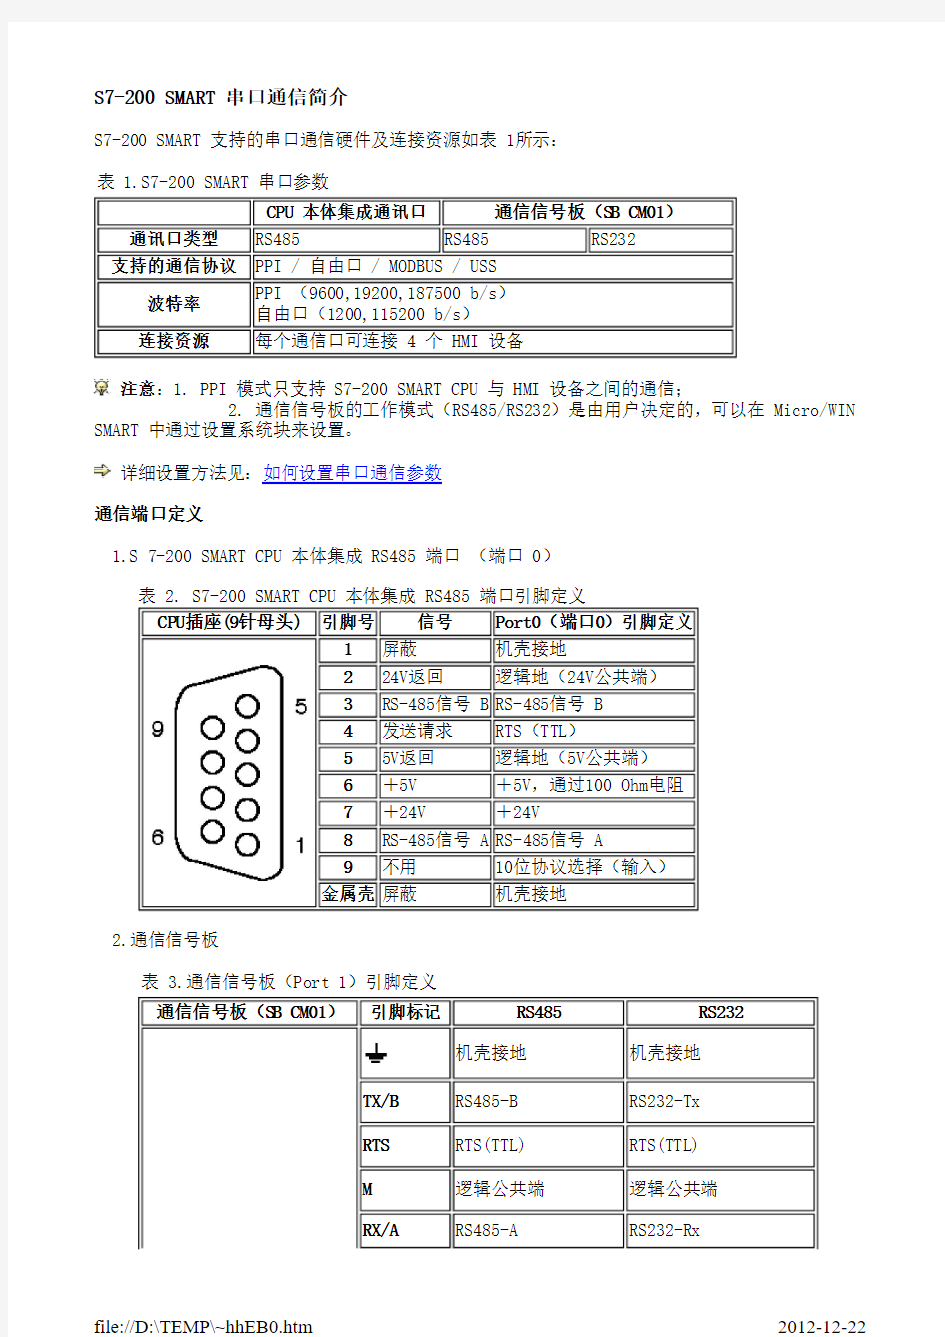 S7 200 SMART PLC 串口通信说明(图文并茂)